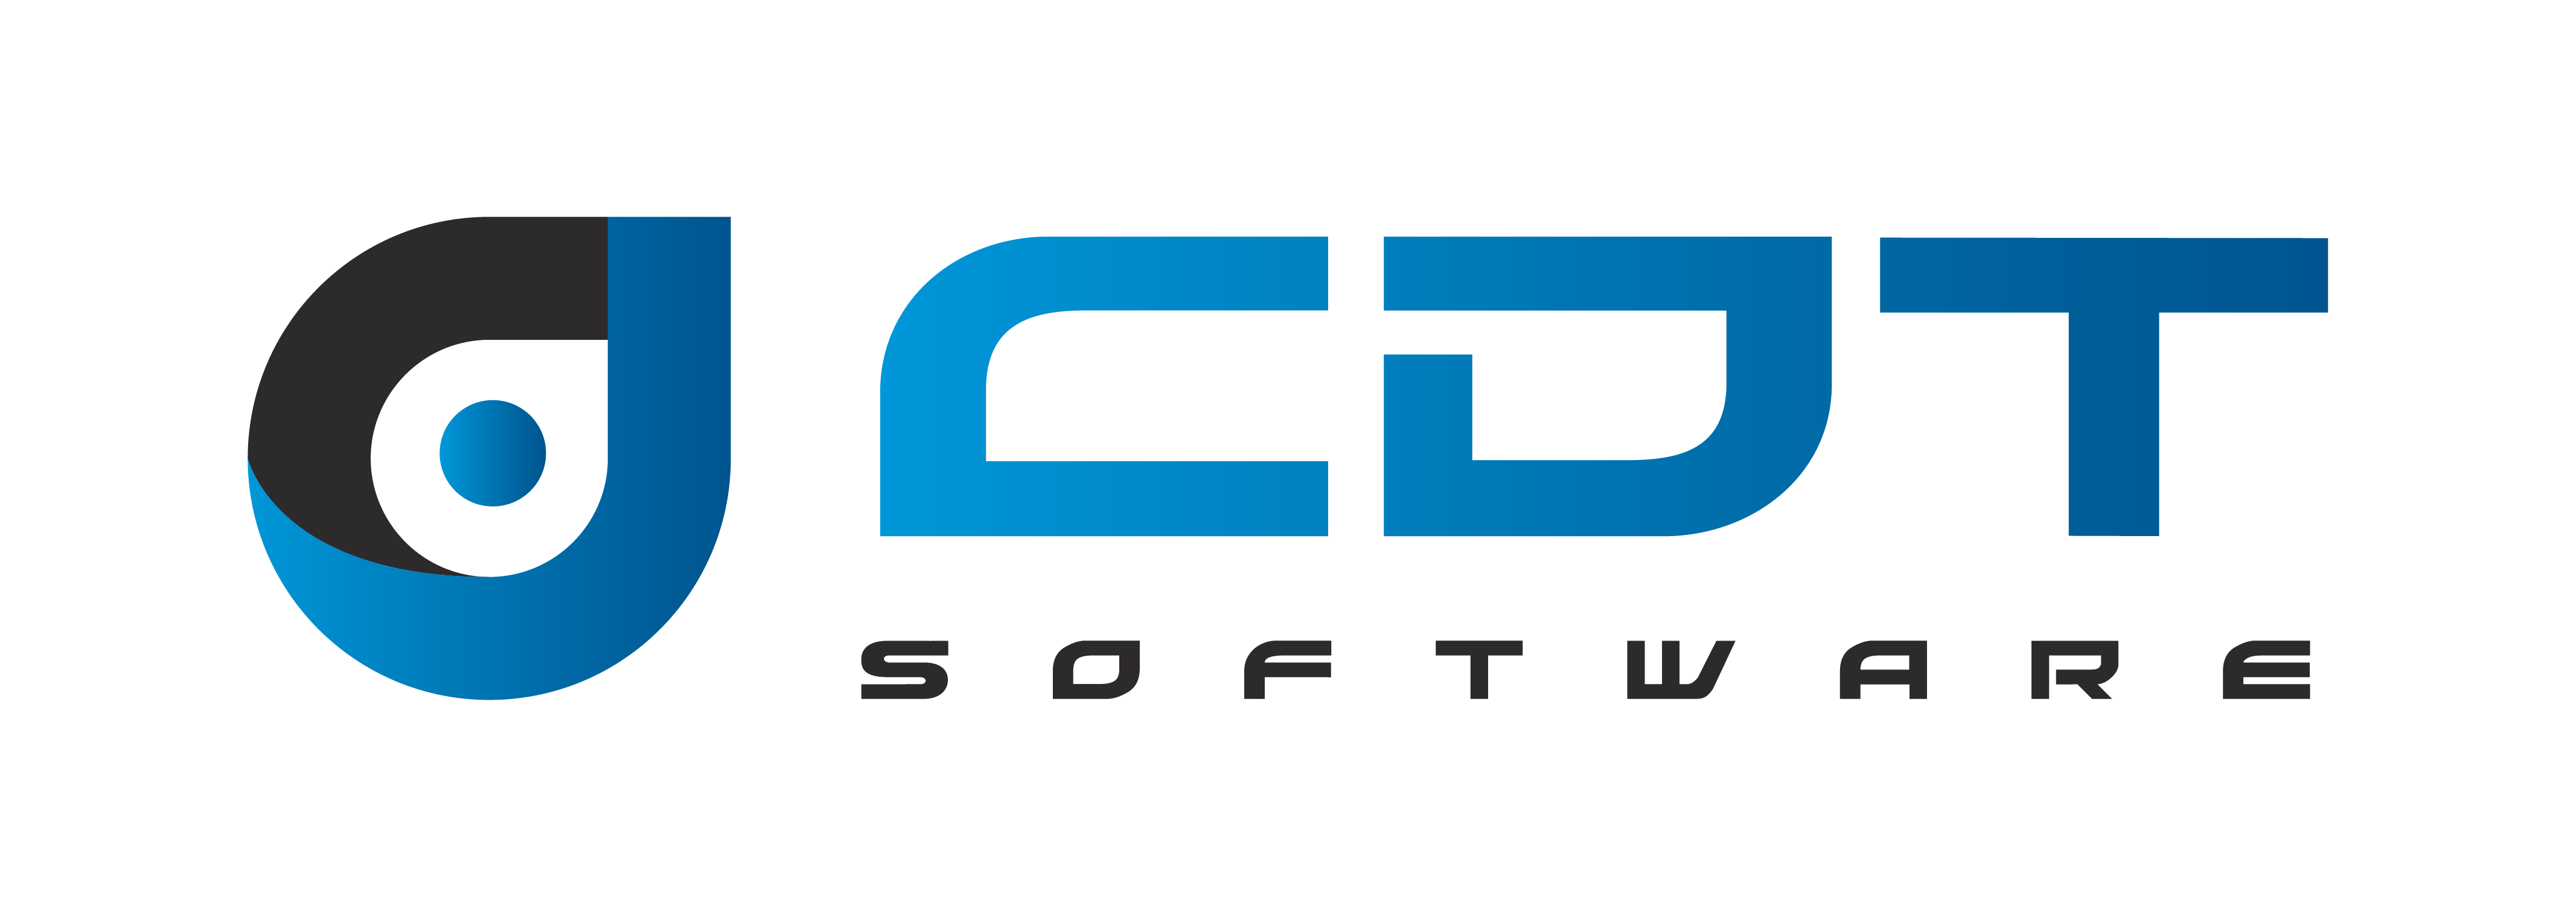 (c) Cdtsoftware.com.br